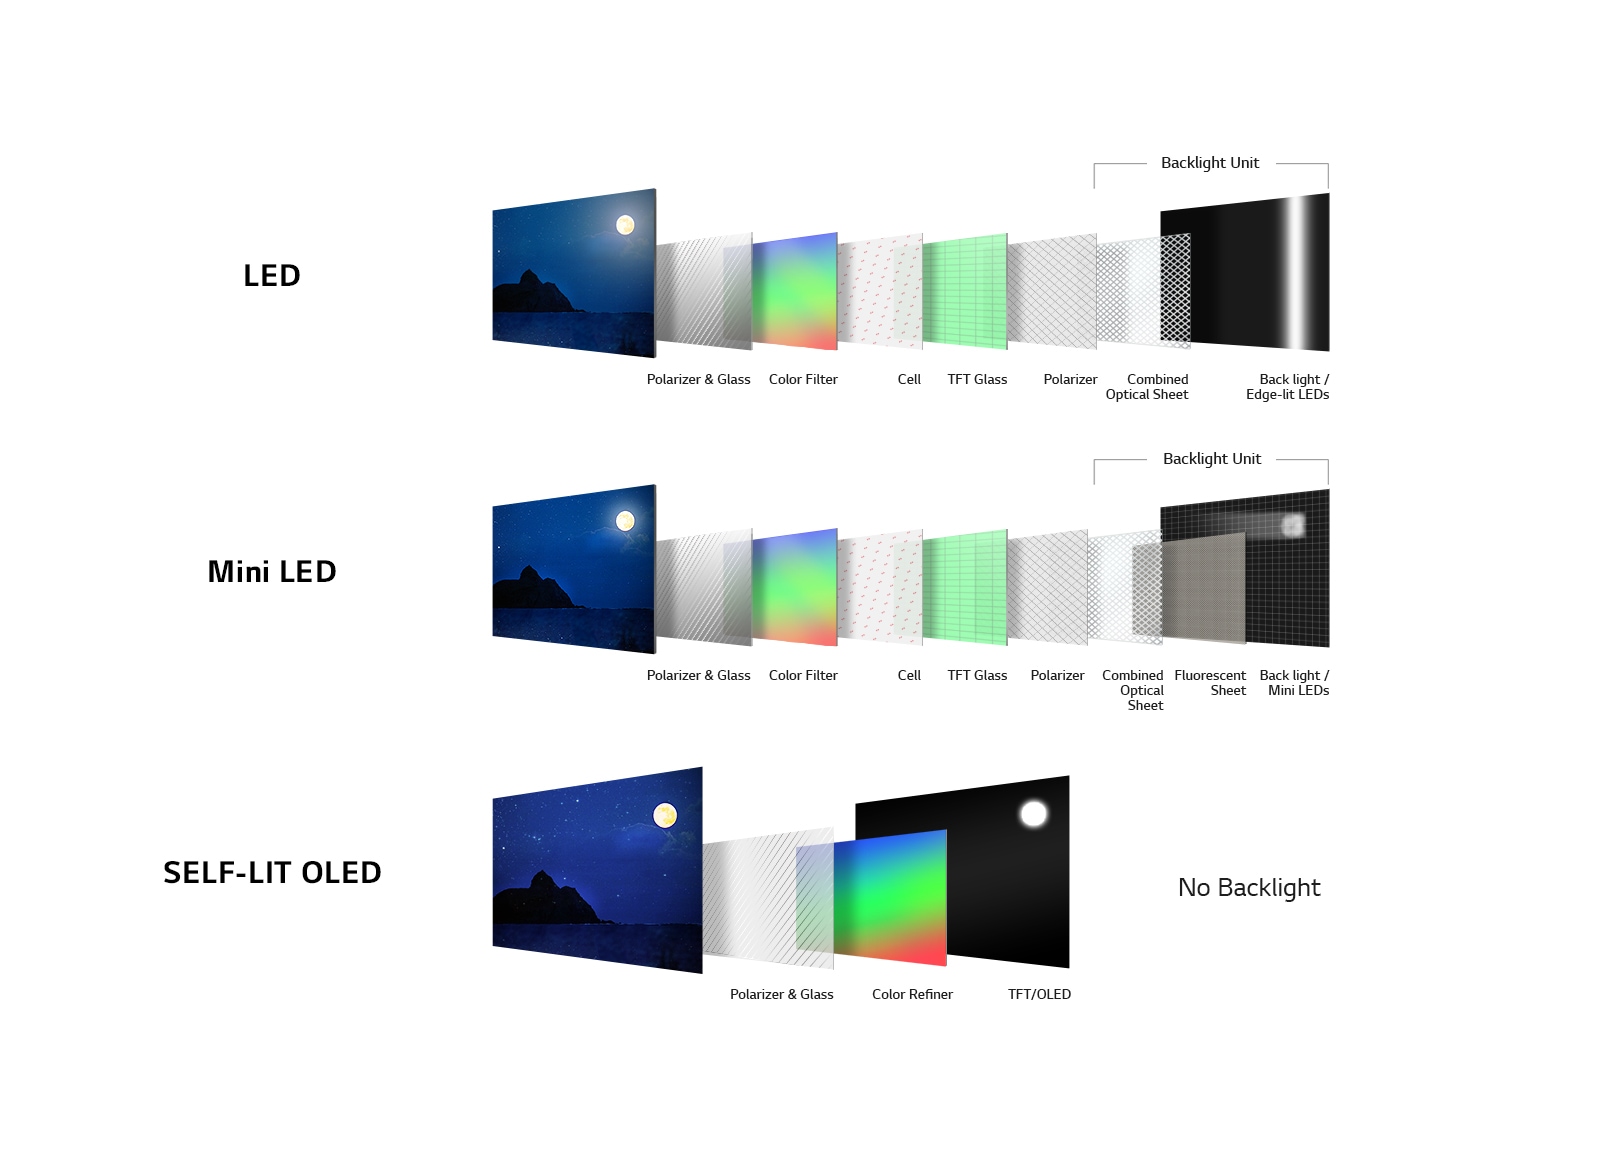 Изображение для сравнения конструктивных различий LED, Mini LED и OLED с самоподсвечивающимися пикселями. LED и Mini LED состоят из поляризатора и стекла, цветового фильтра и блока подсветки. OLED с самоподсвечивающимися пикселями не имеет задней подсветки, состоит из поляризатора и стекла, улучшителя цвета и TFT/OLED.